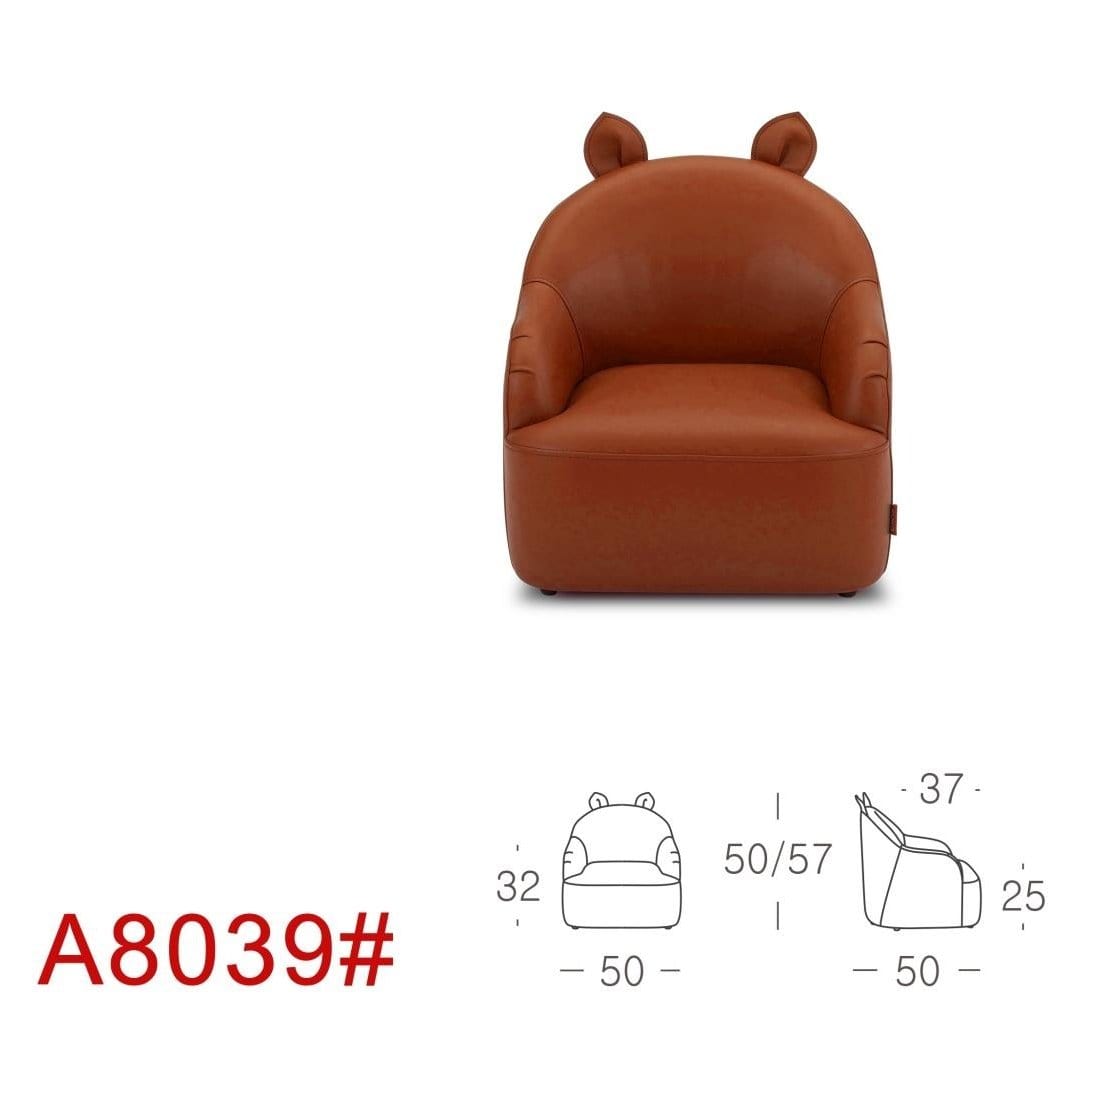 #1 Kuka Full-Leather Bear Kids Sofa Chair #A8039 picket and rail